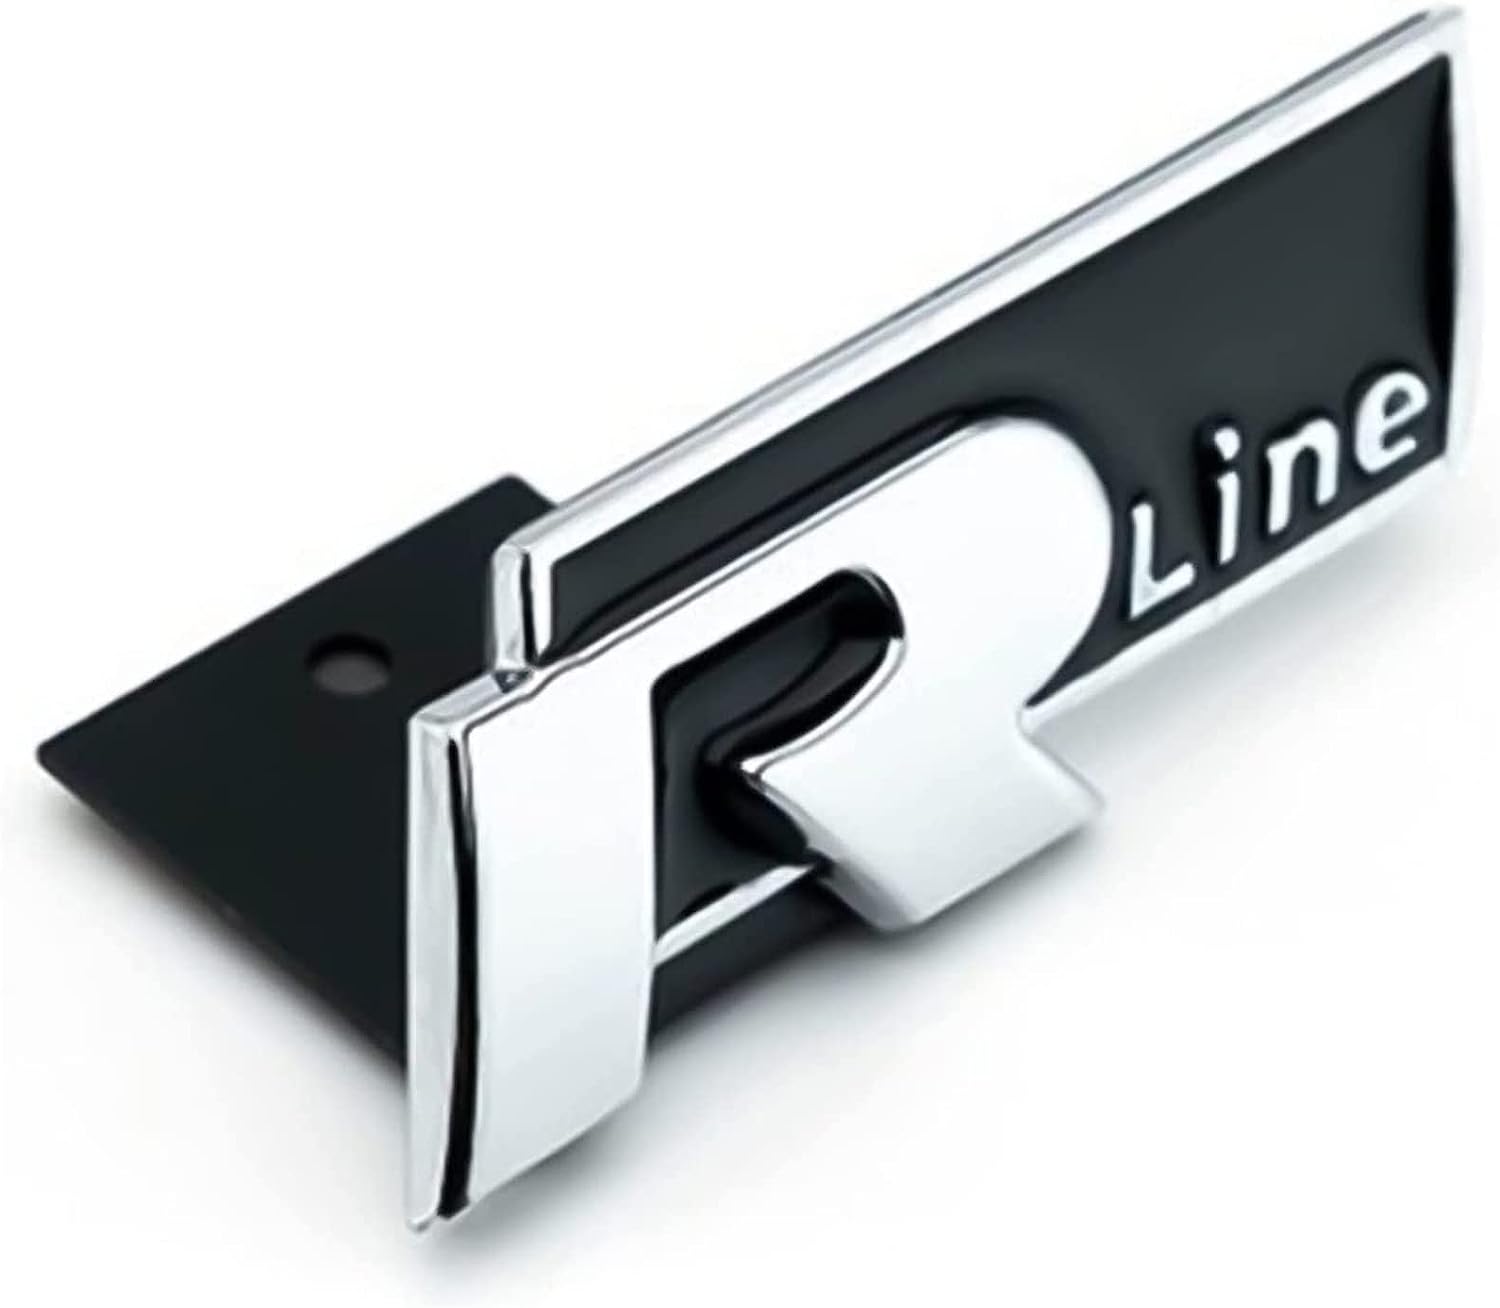 Logo de calandre Volkswagen R-Line (bande adhésive) – France Tuning